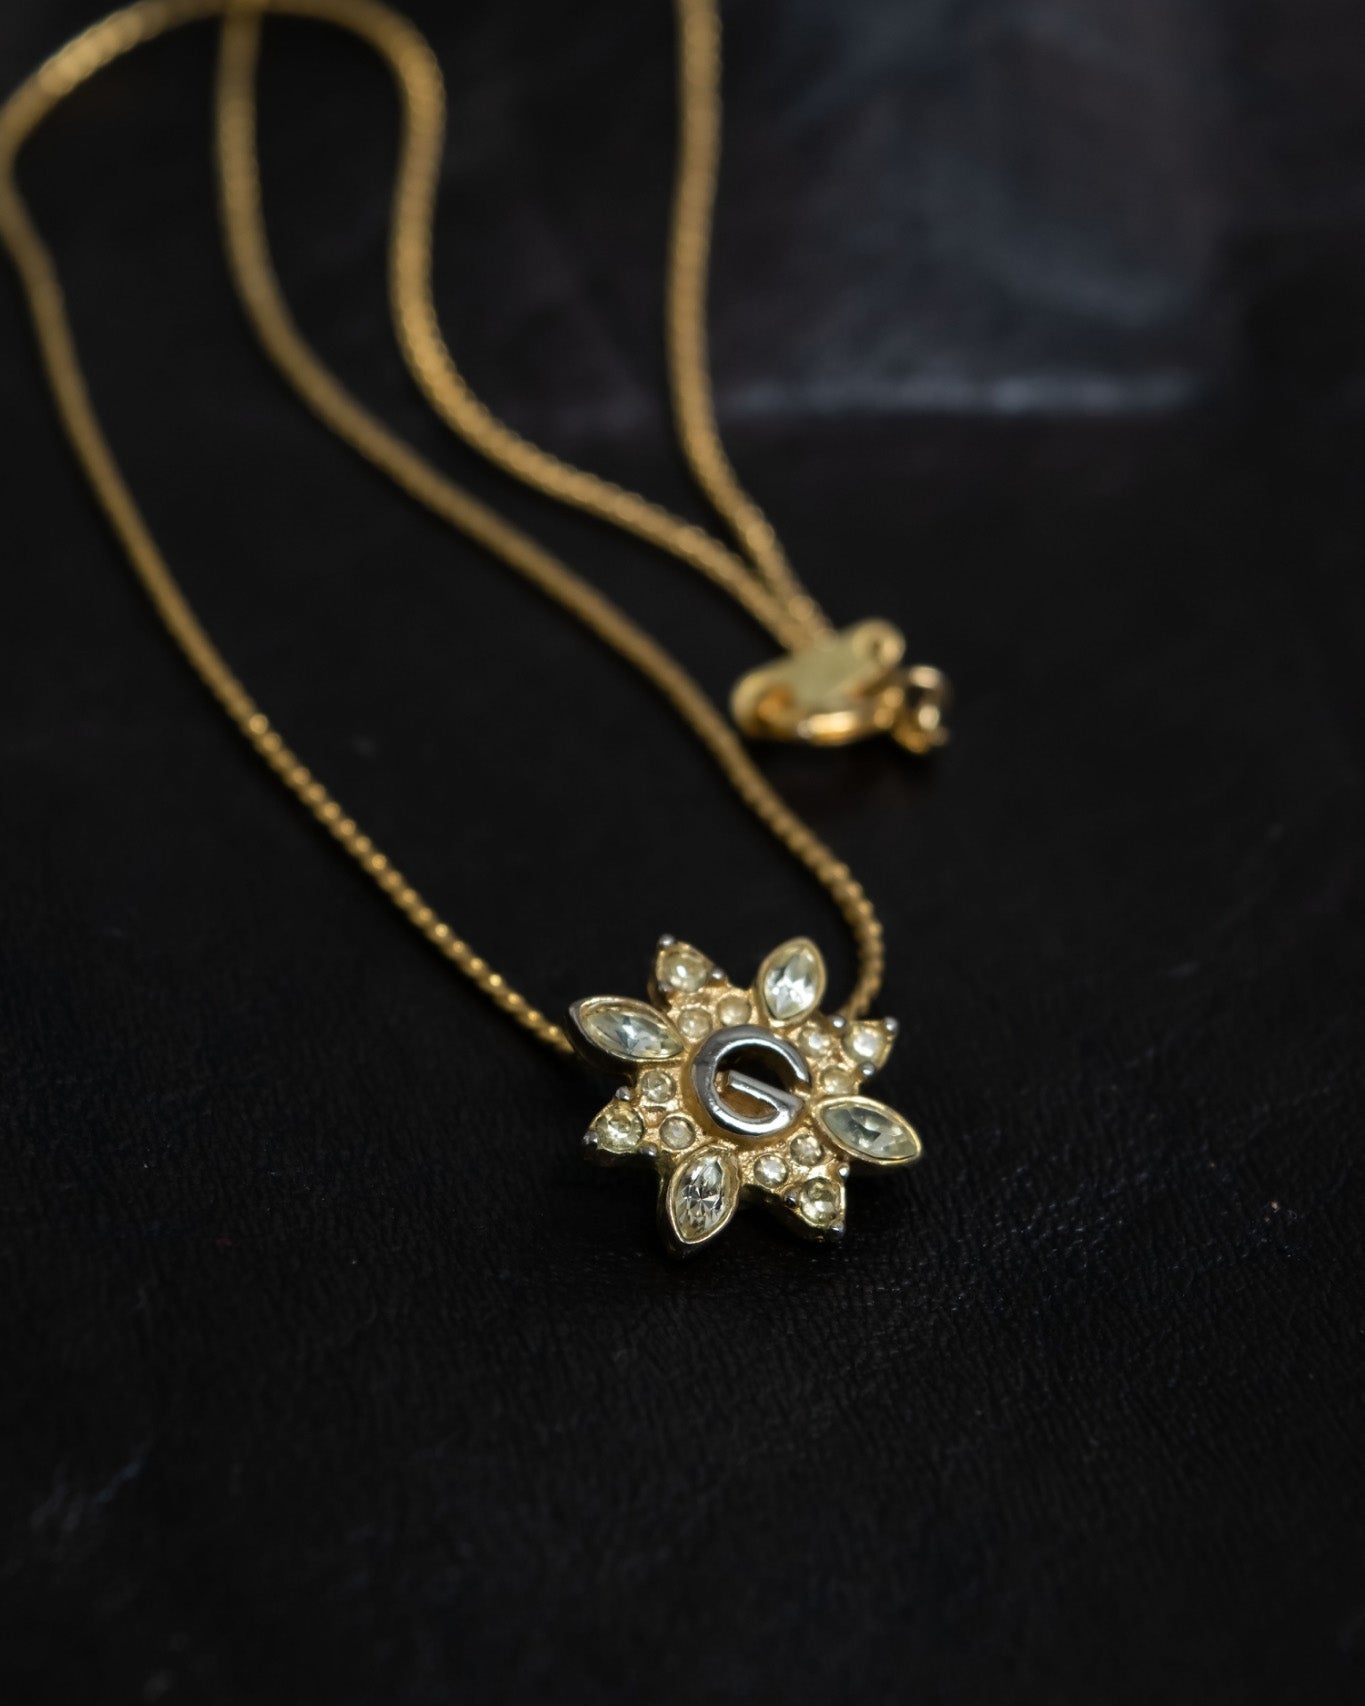 Givenchy Sun Bijoux Necklace